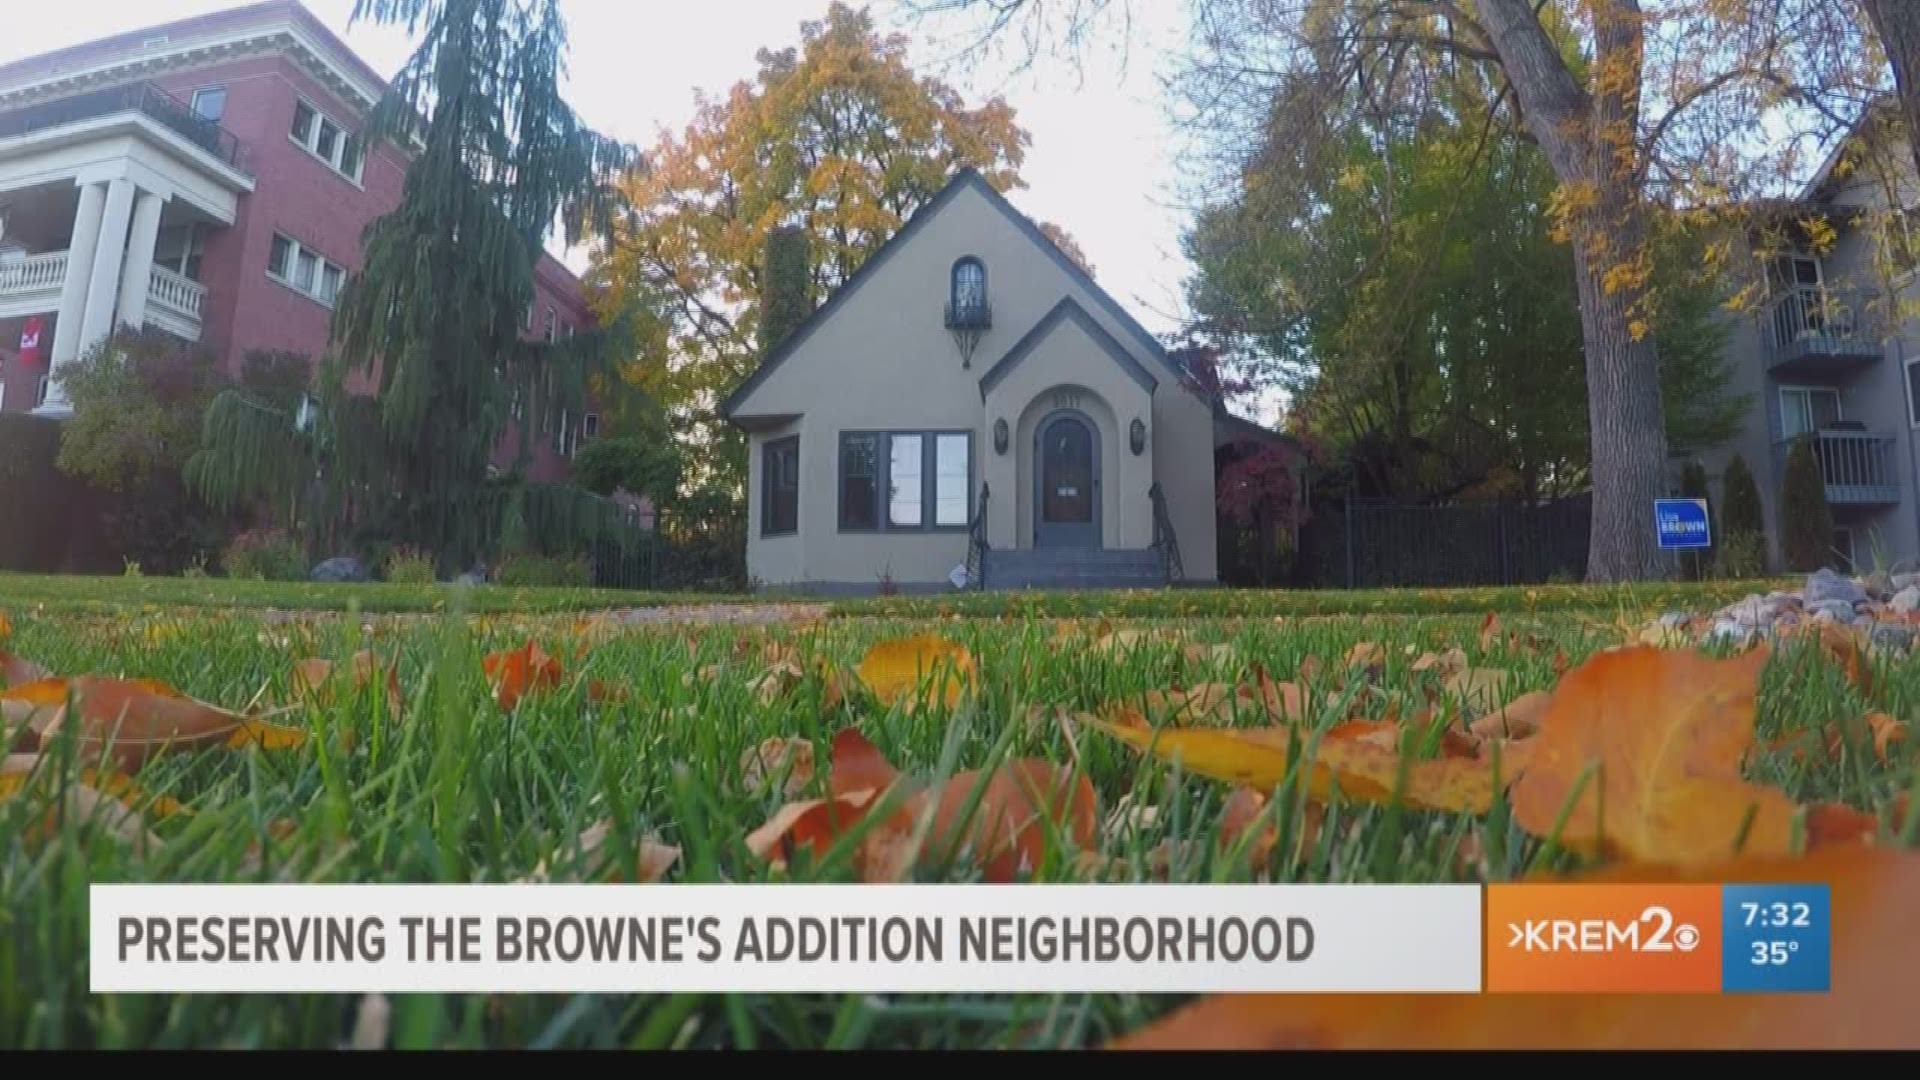 Spokane works to preserve Browne's Addition